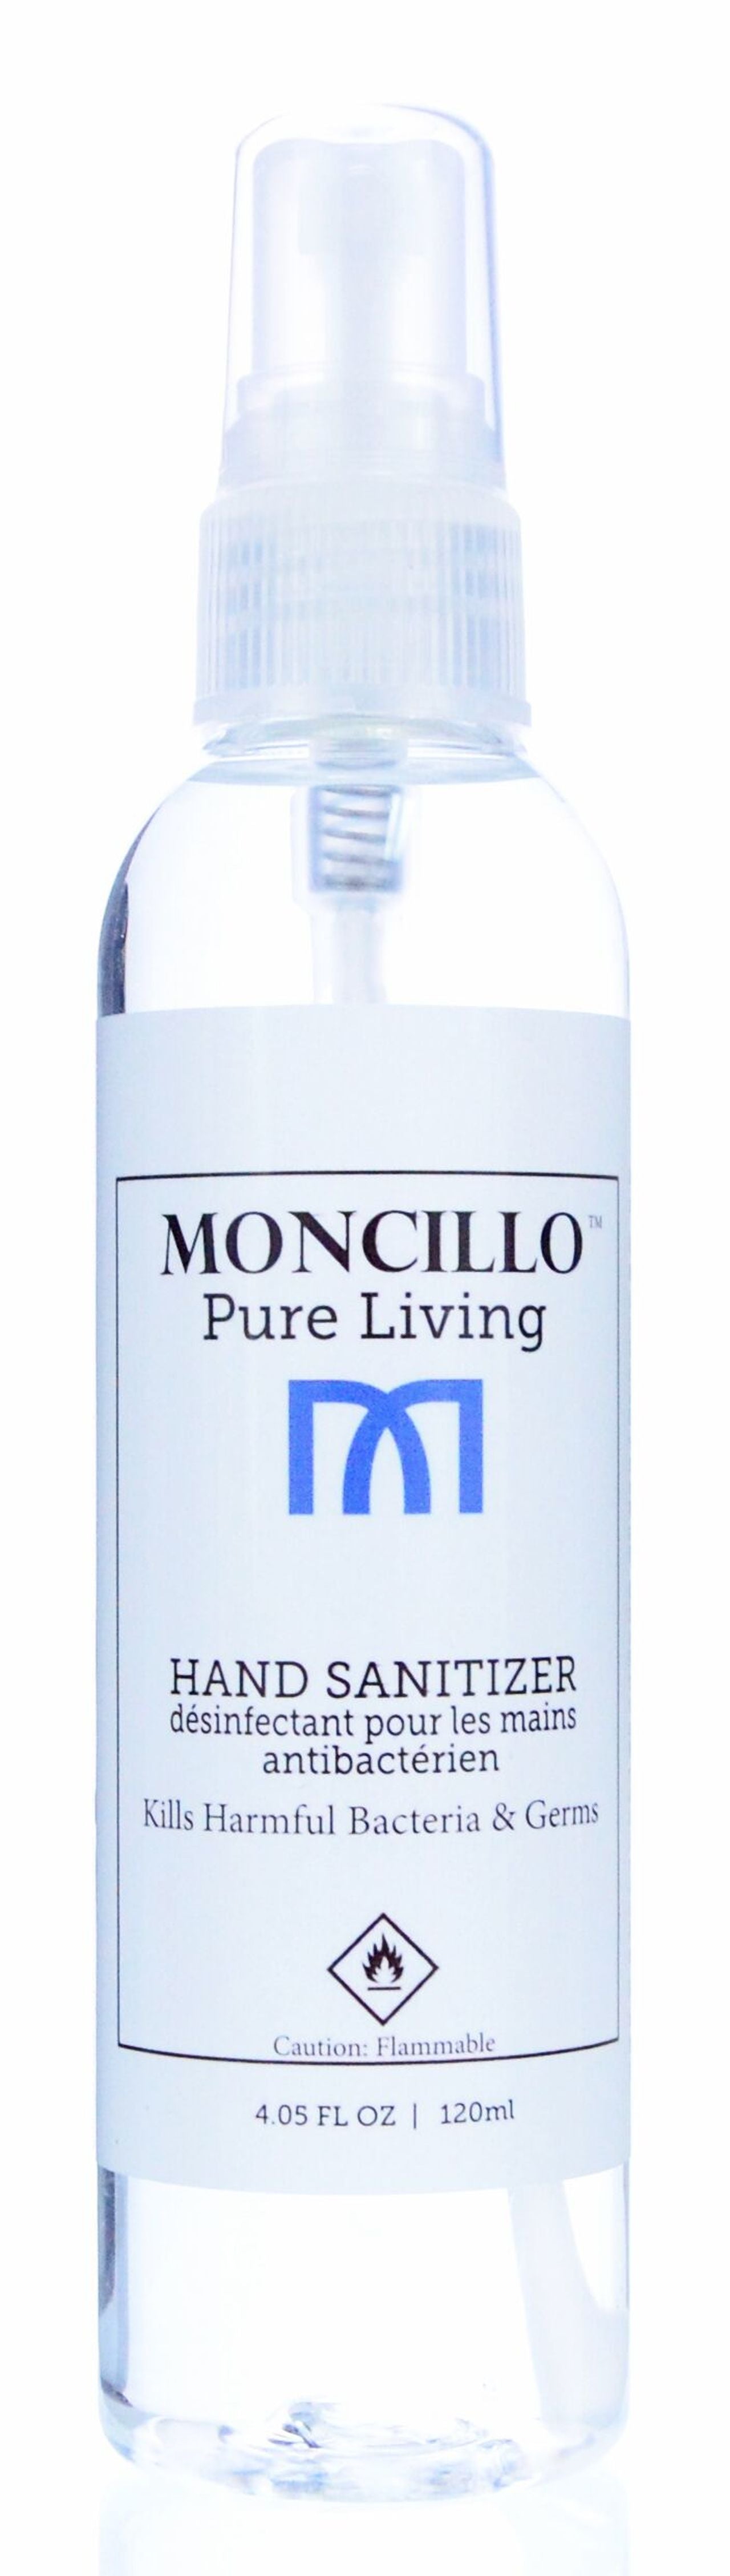 Moncillo Hand Sanitizer 120ml